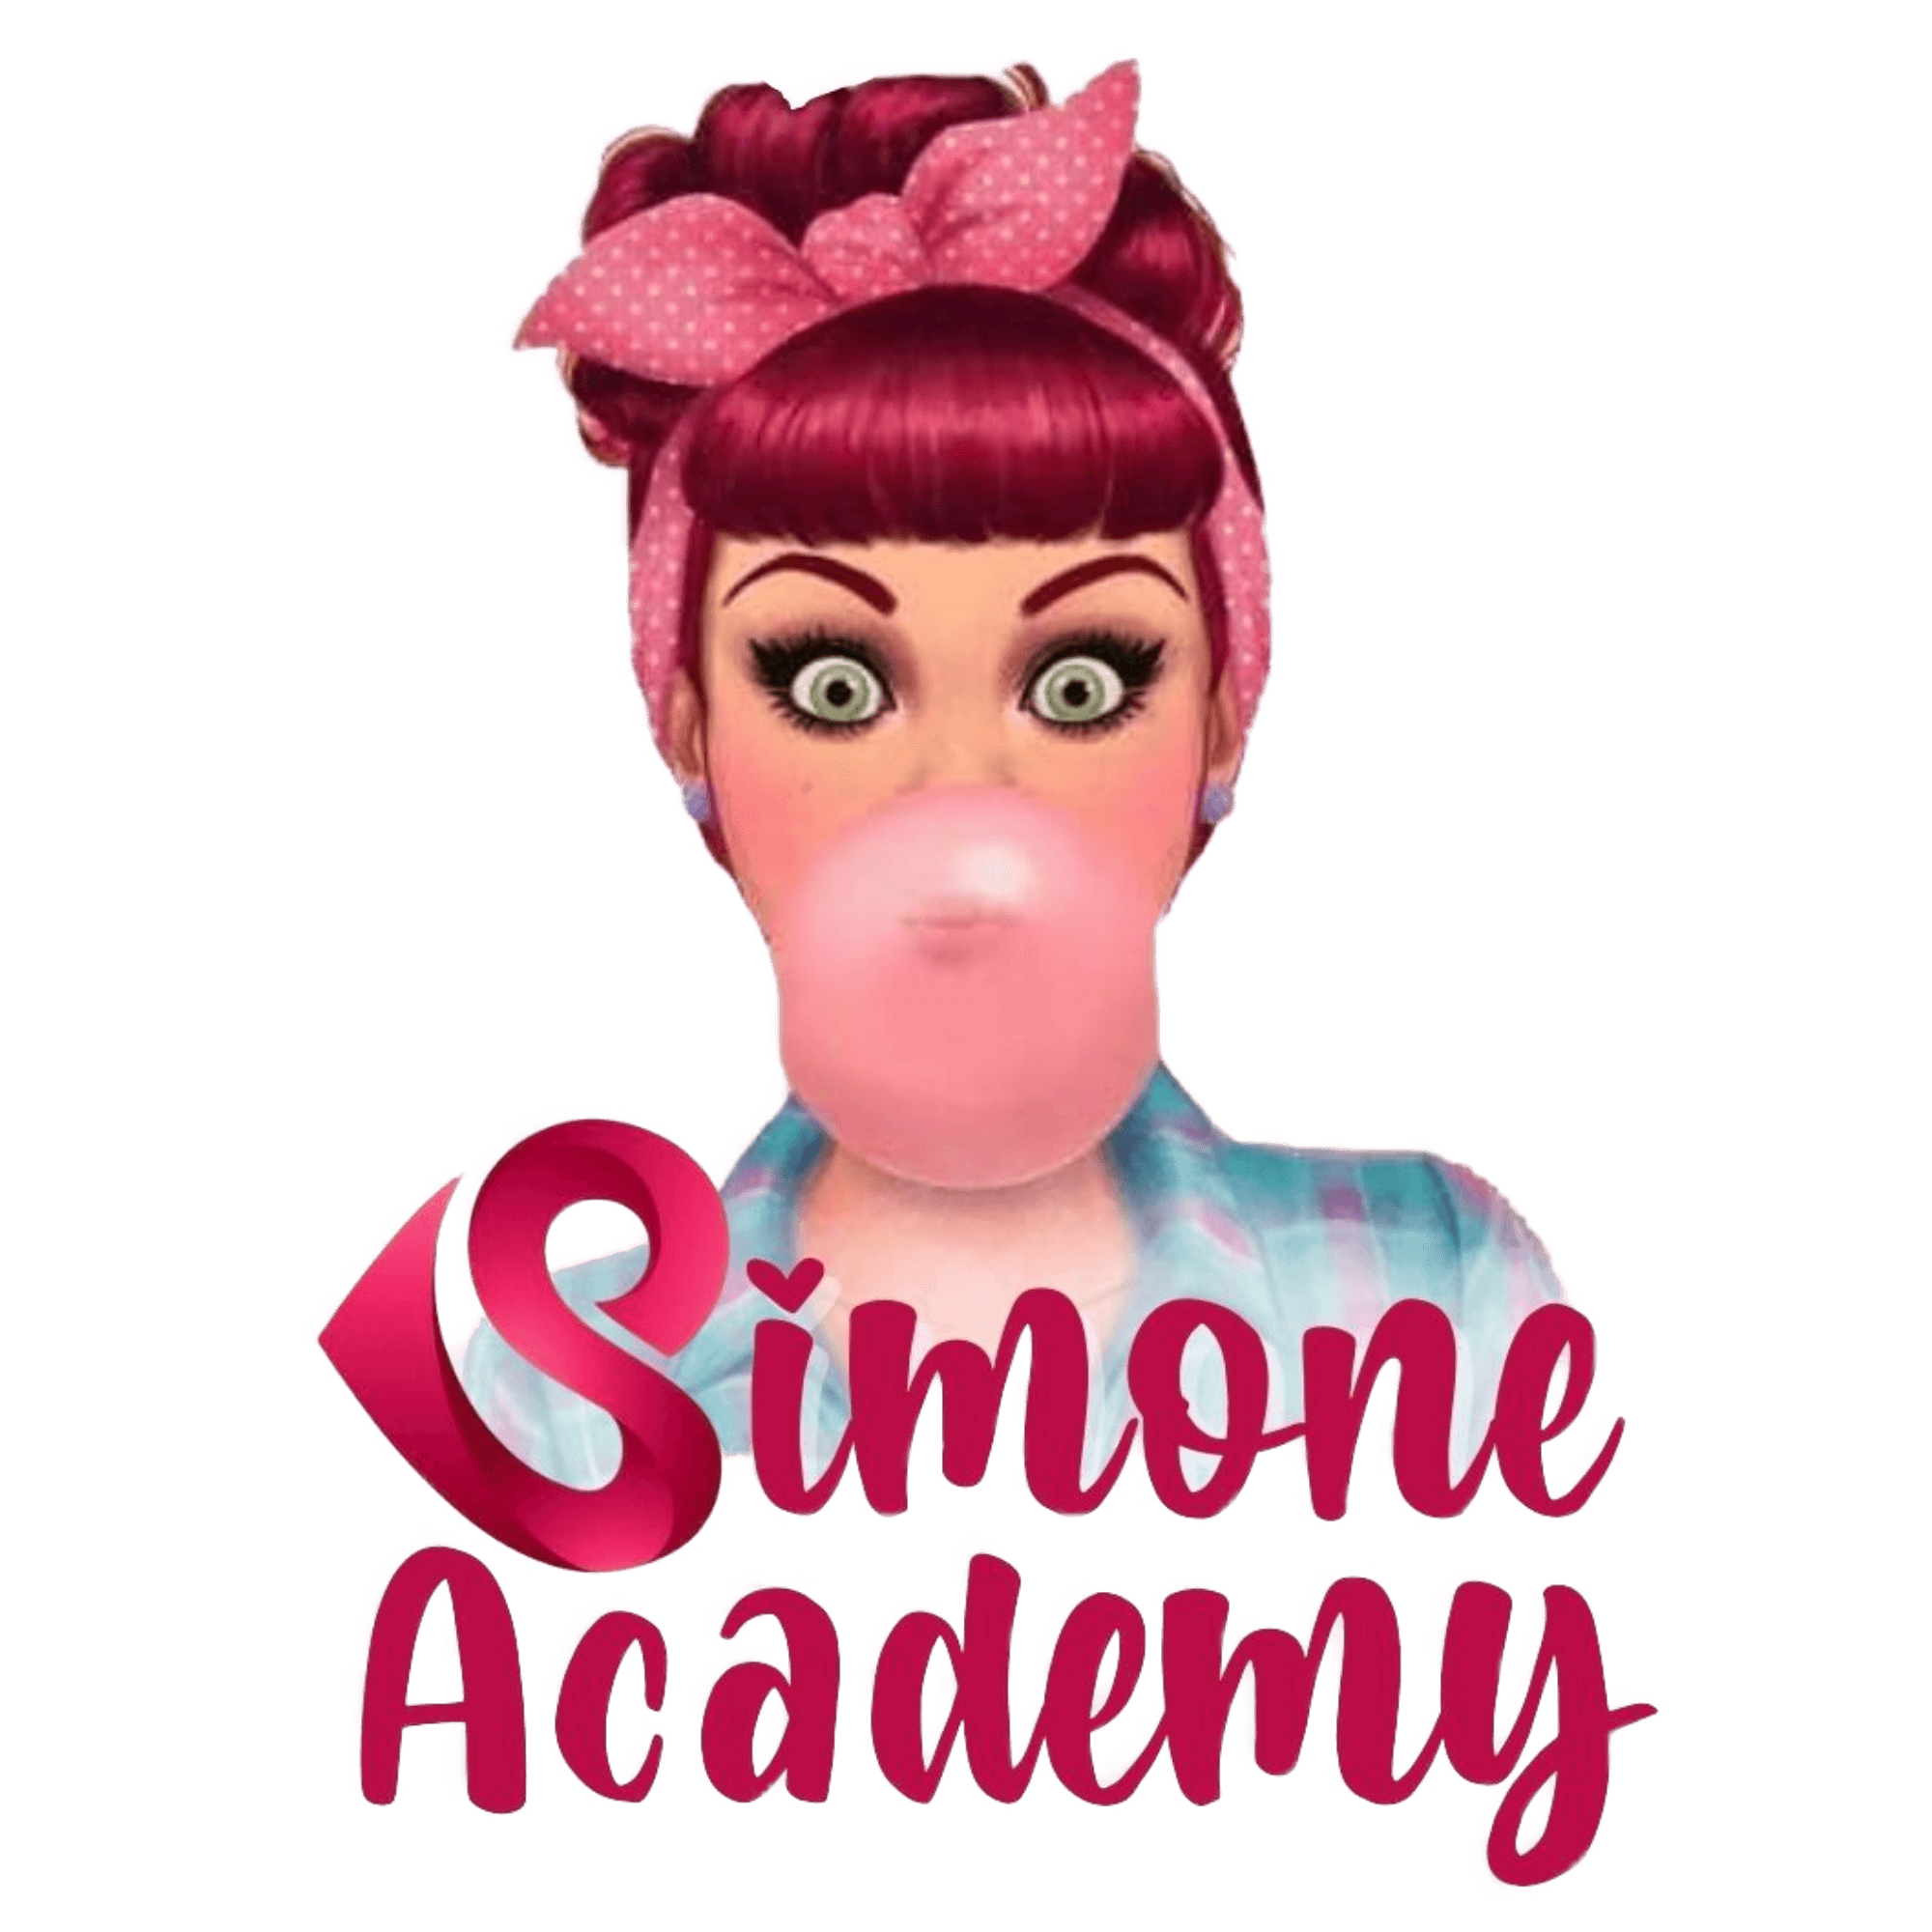 La Simone Academy